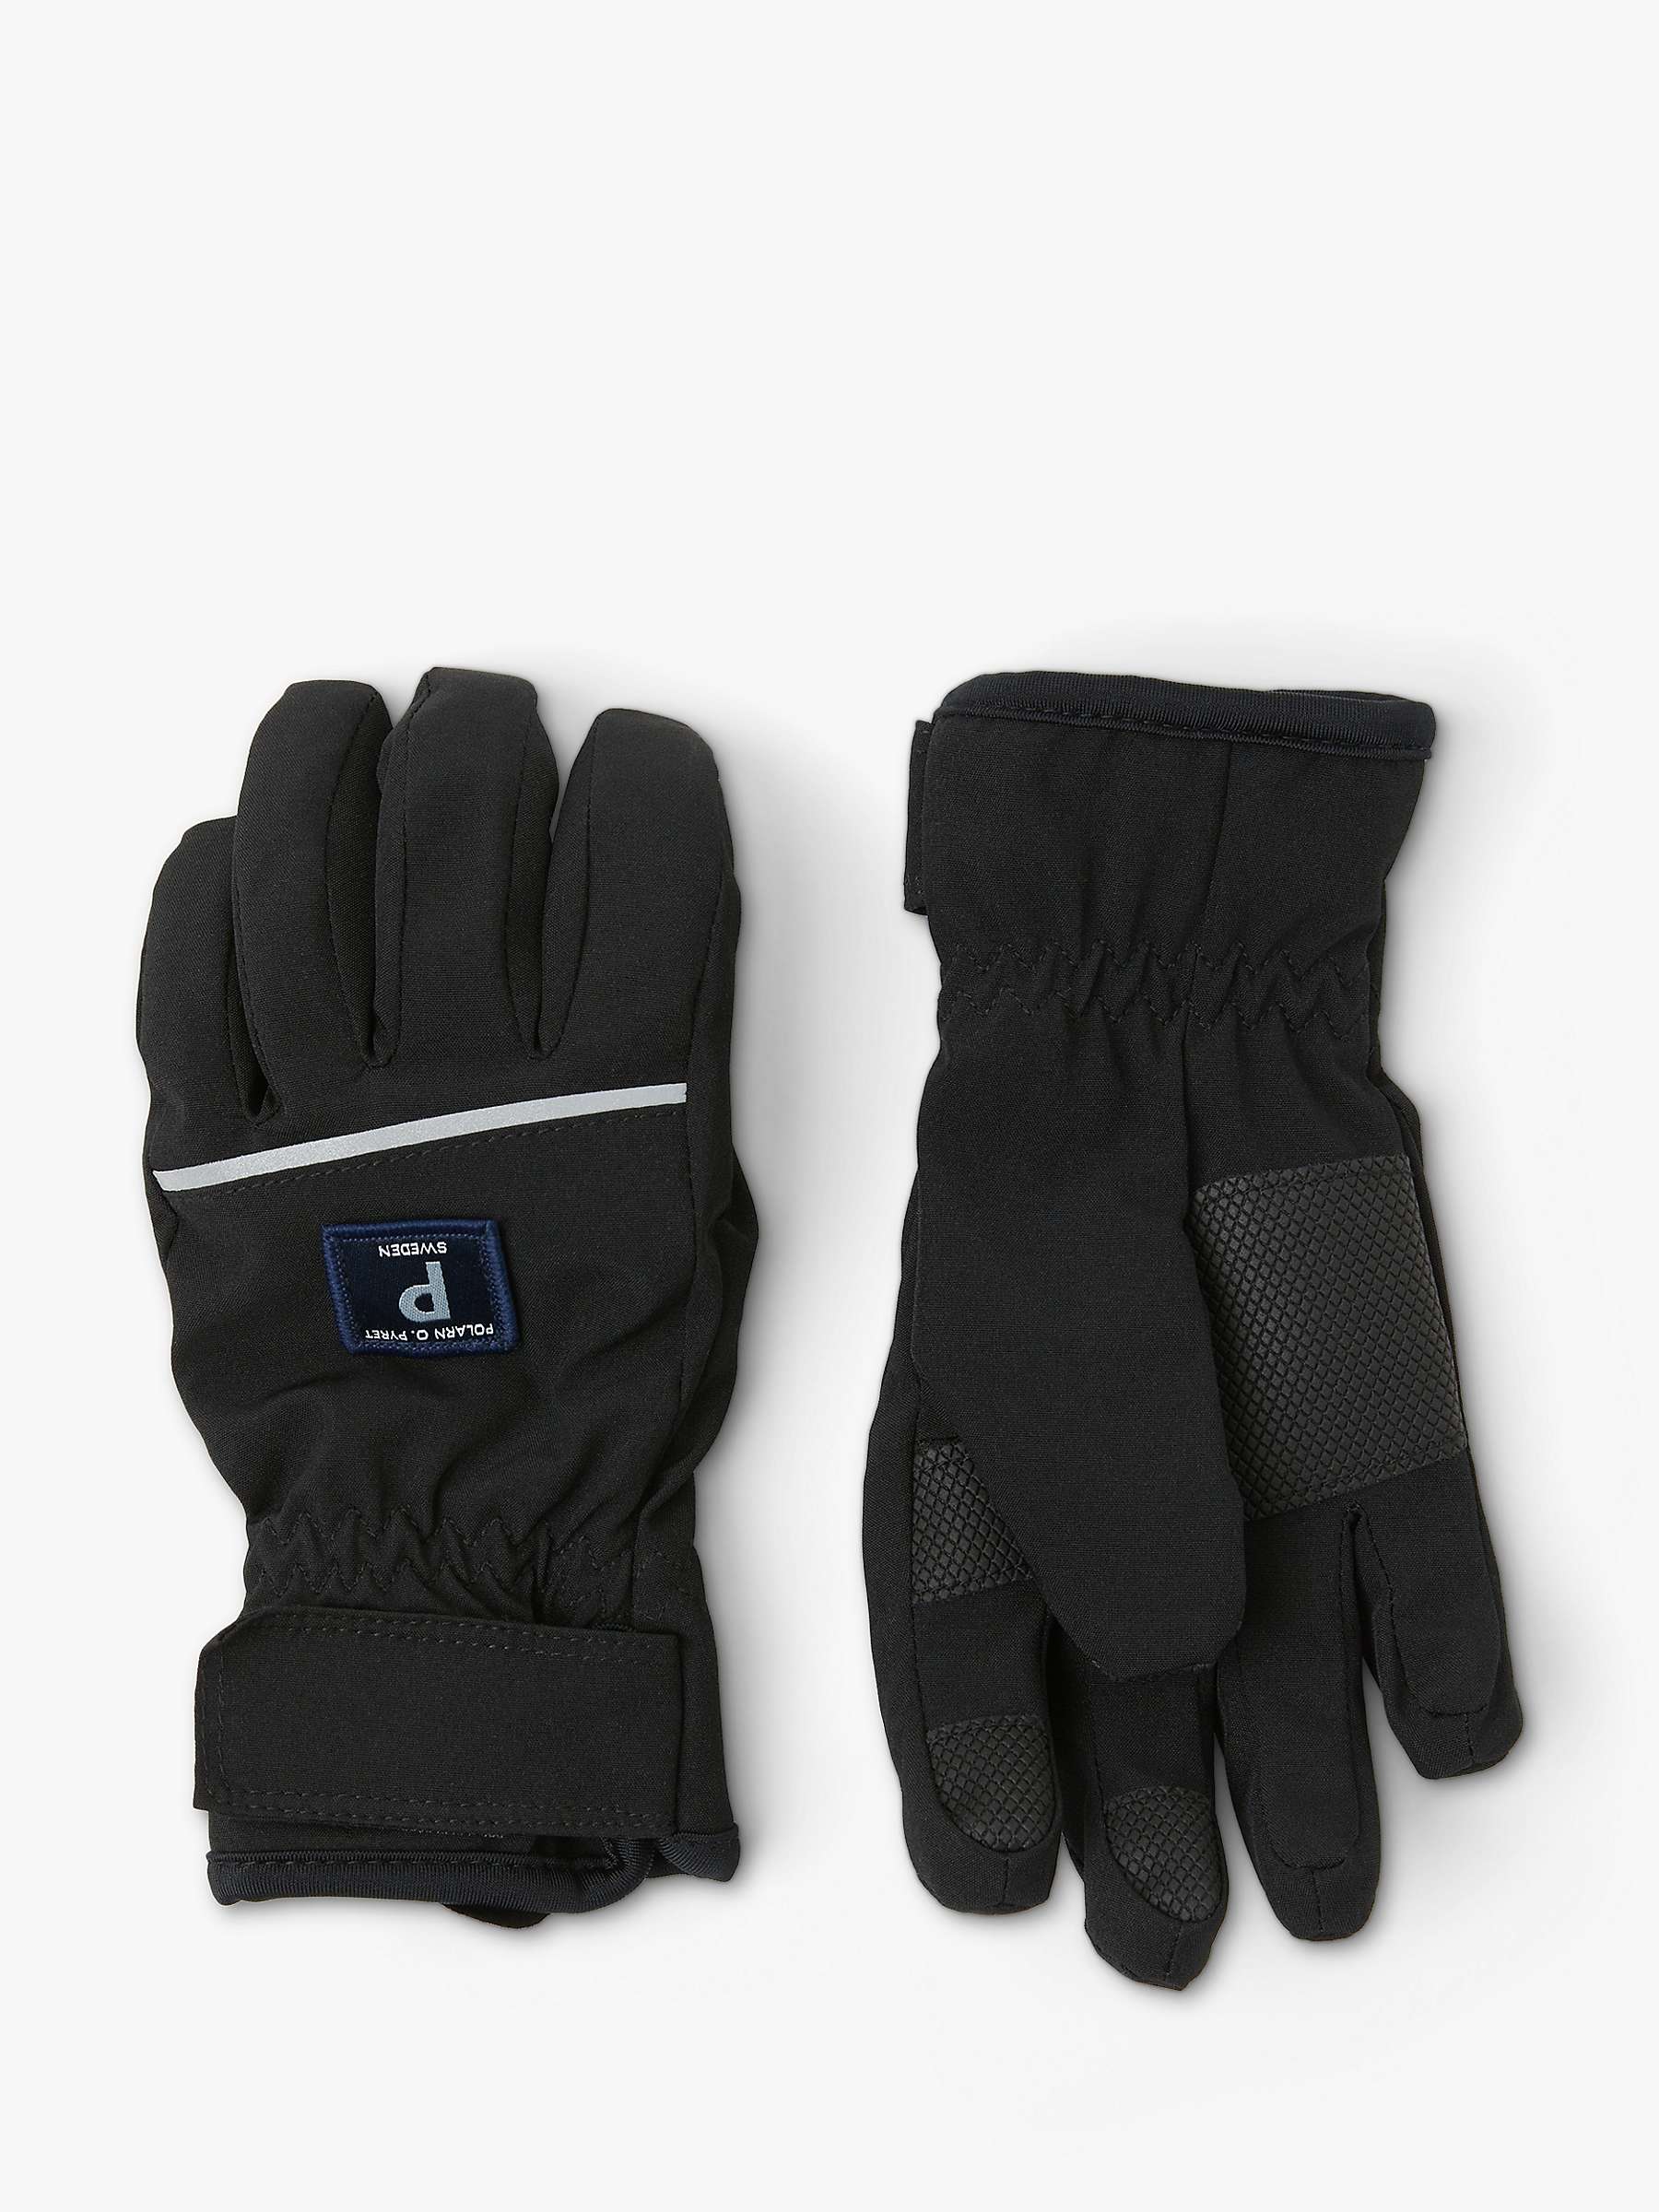 Buy Polarn O. Pyret Kids' Soft Shell Gloves, Black Online at johnlewis.com